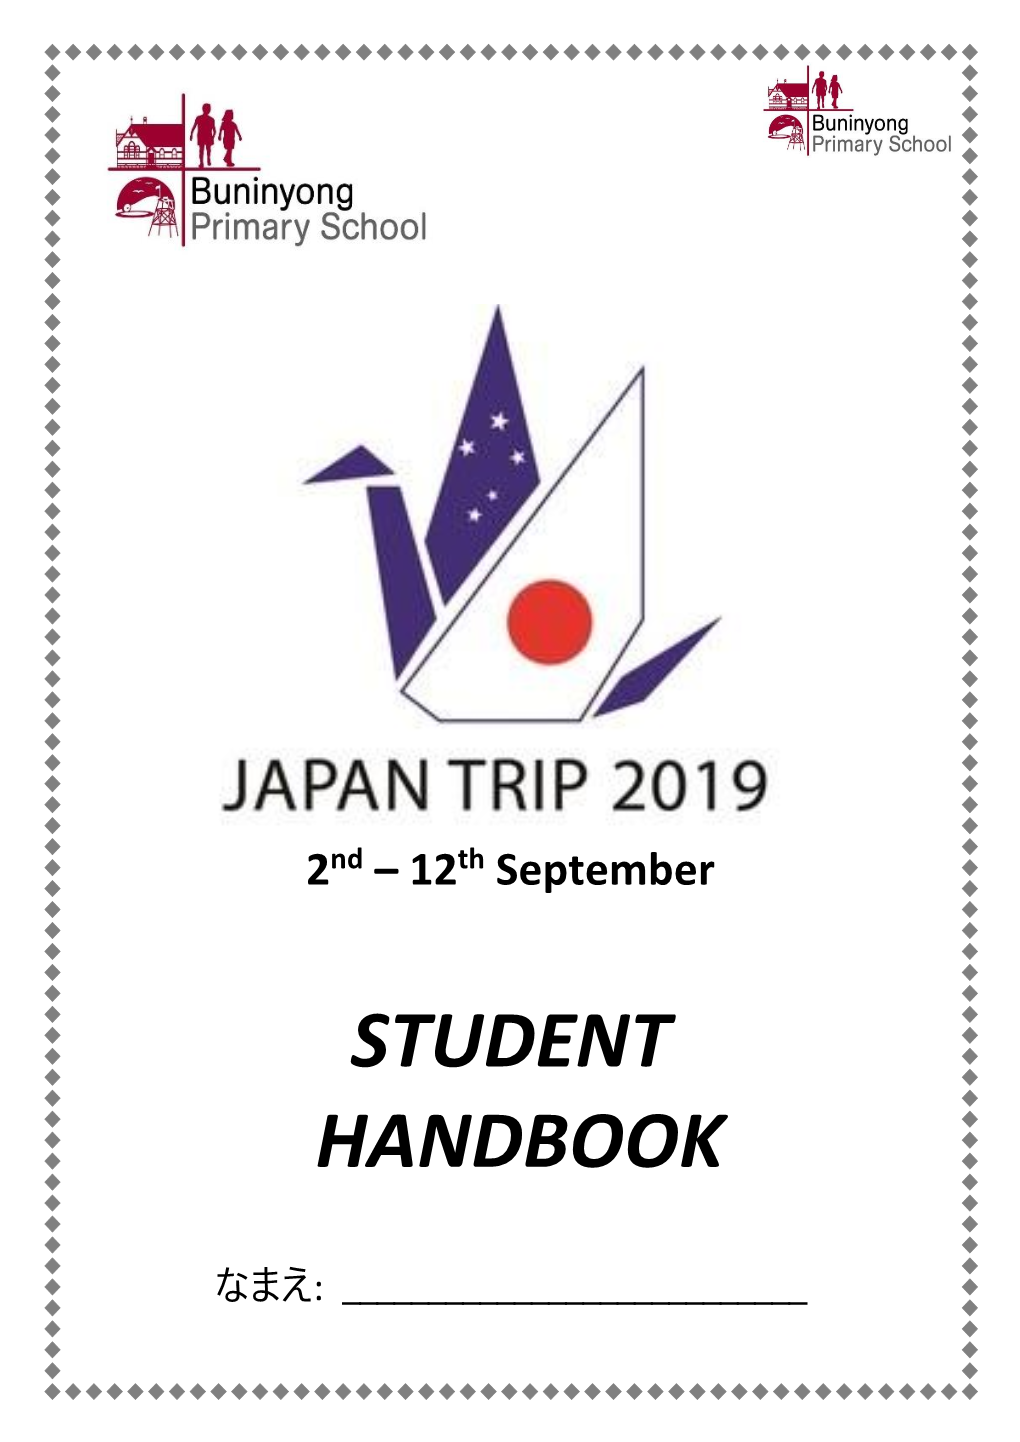 Handbook Students JT 2019